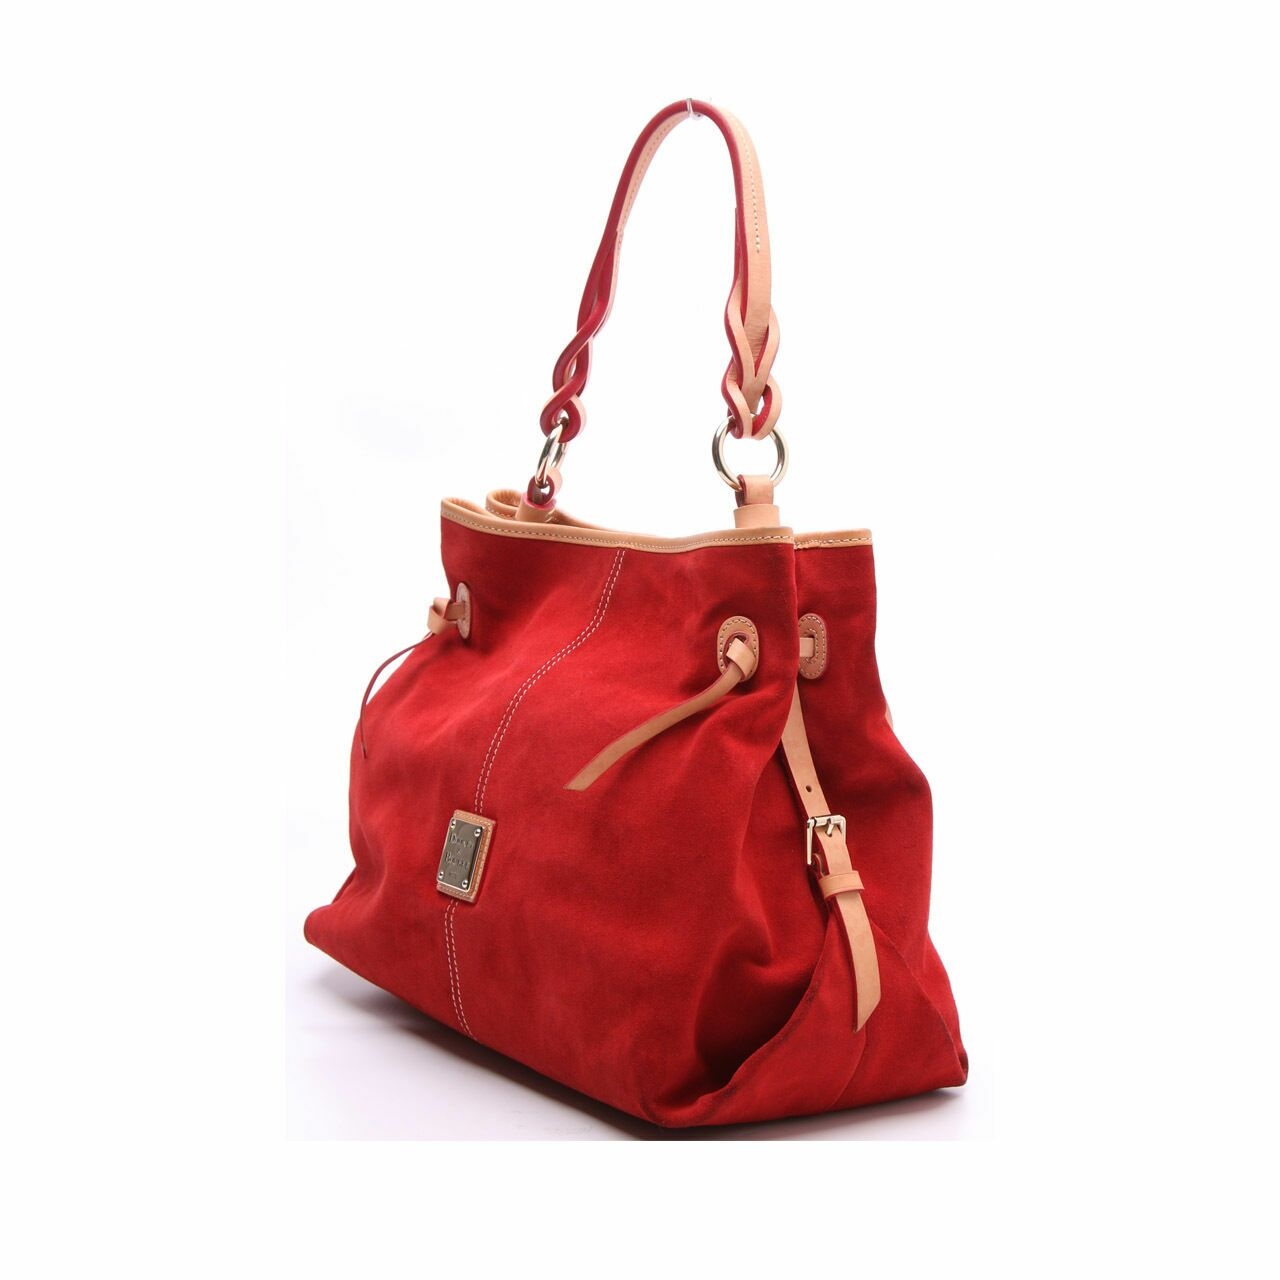 Dooney & Bourke Red Suede Shoulder Bag 